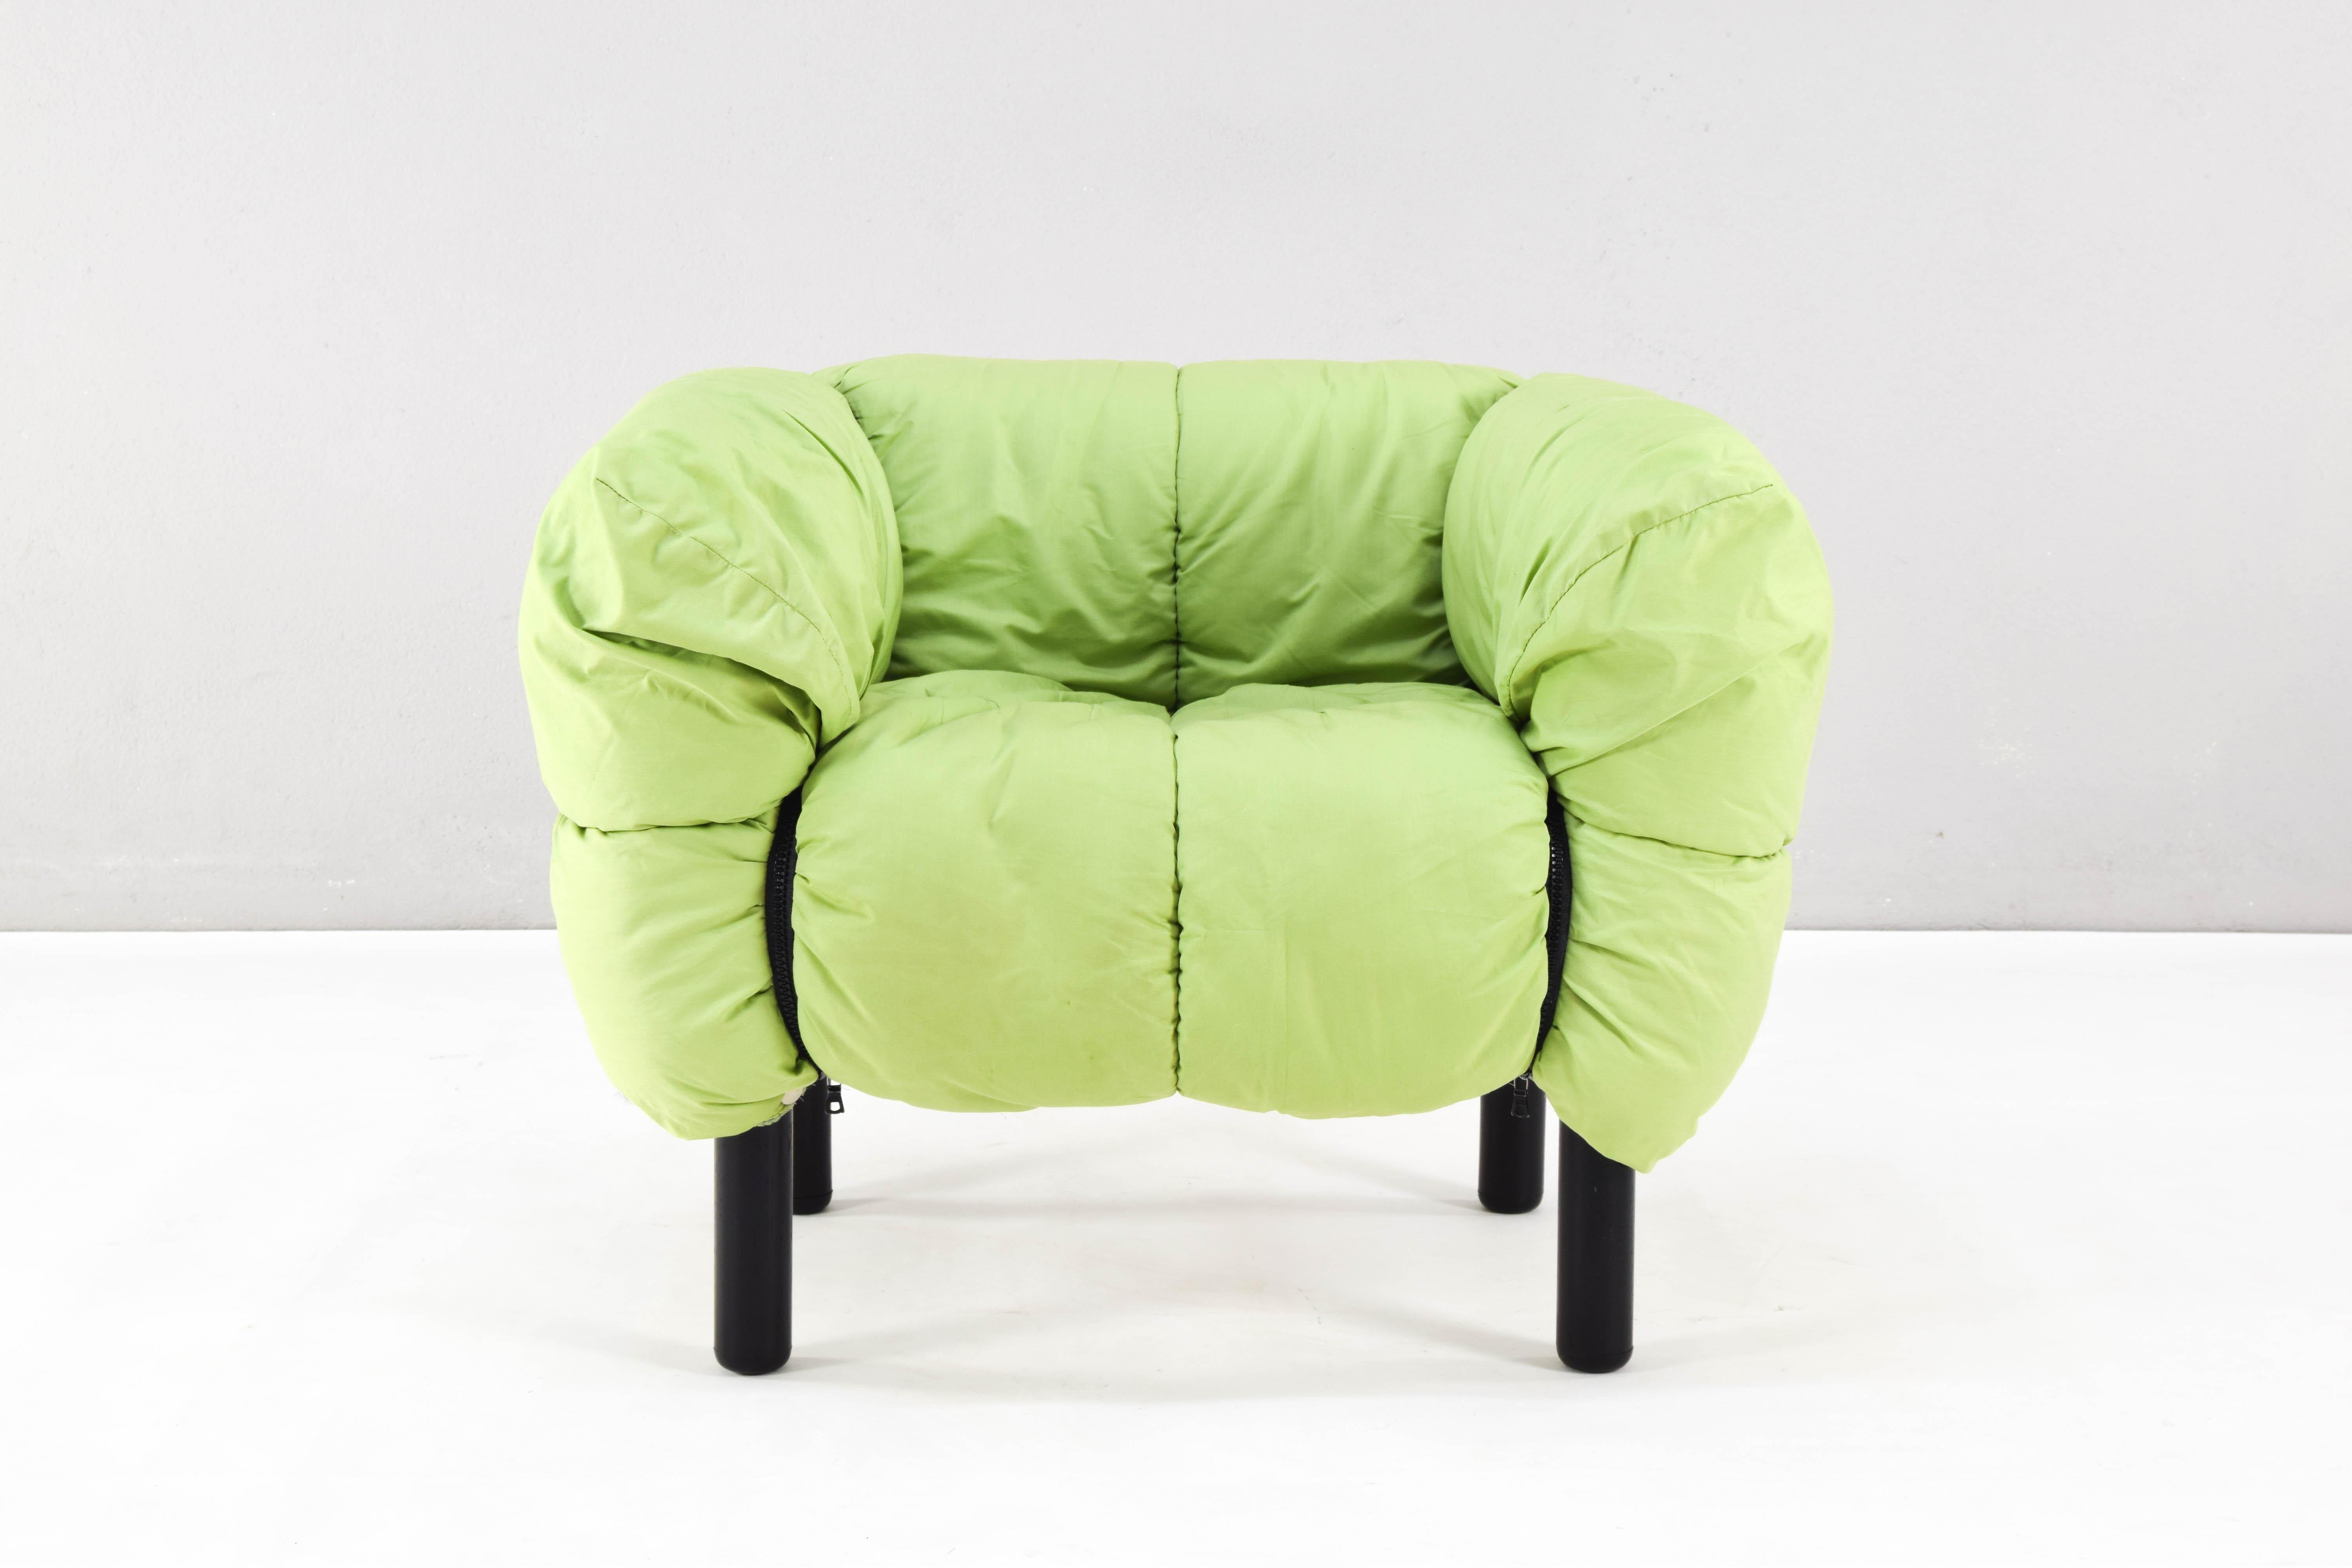 Spanish Pecorelle Strips Mid-Century Modern Chair by Cini Boeri to Arflex